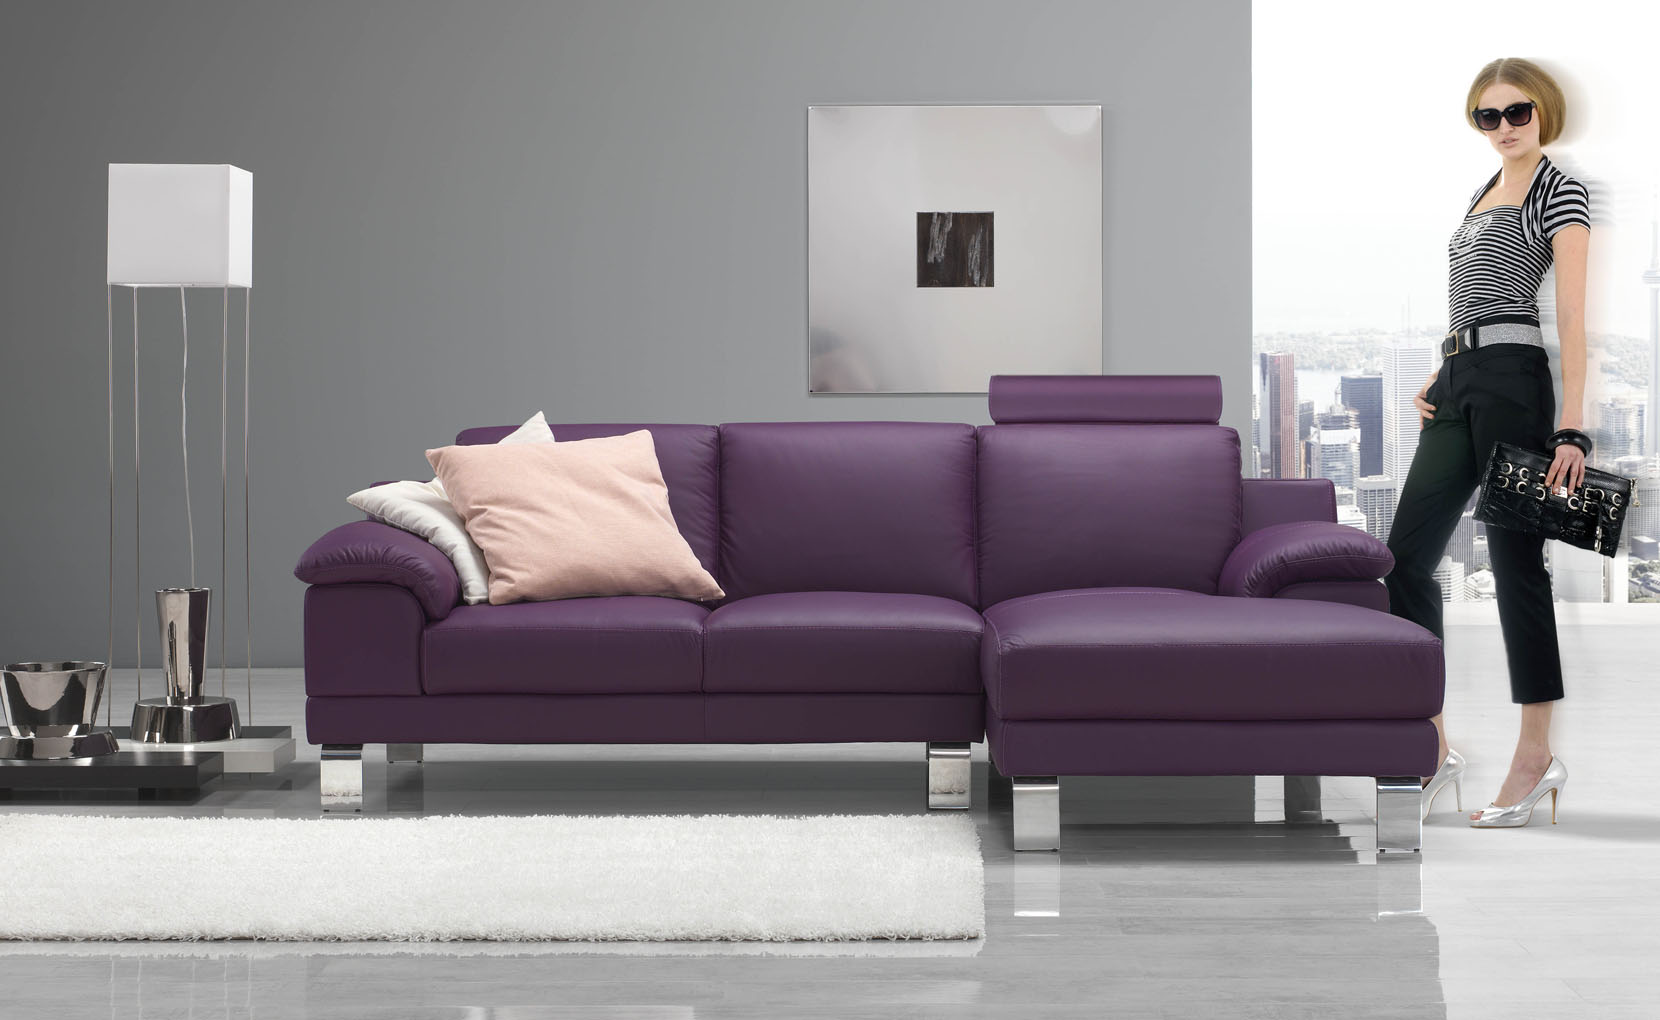 Ego Italiano Sofa The available Company. at Ultimate Free Living